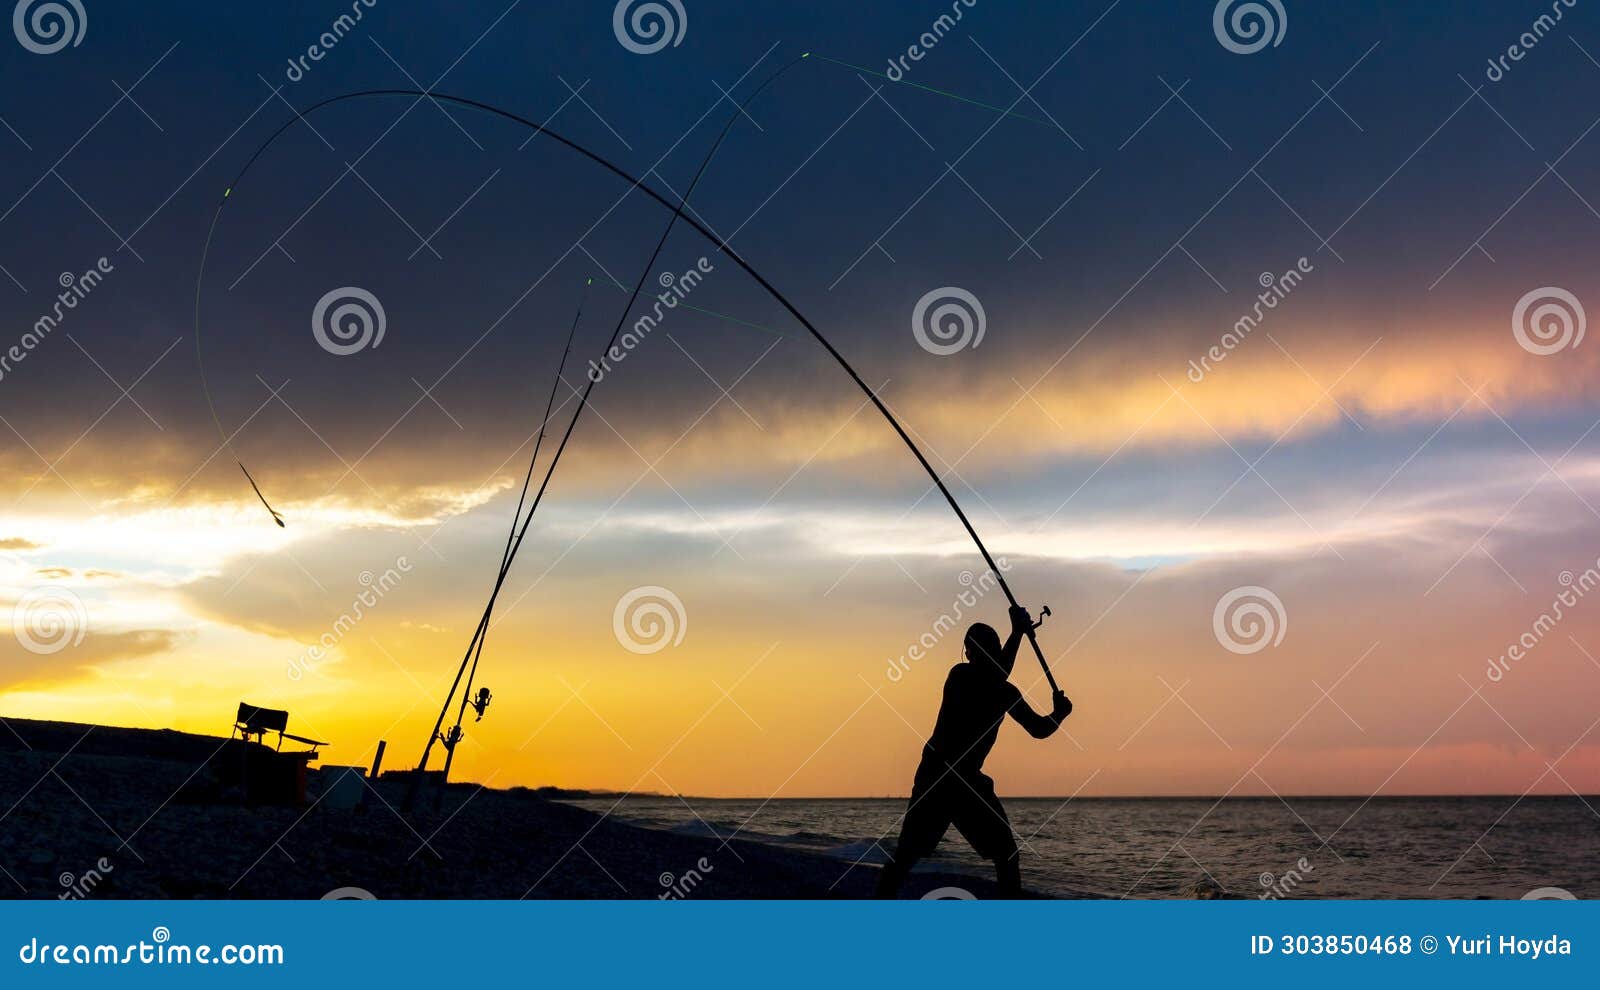 https://thumbs.dreamstime.com/z/fisherman-cast-fishing-rods-seashore-dramatic-sunset-fisherman-silhouette-night-fishing-illuminated-fisherman-303850468.jpg